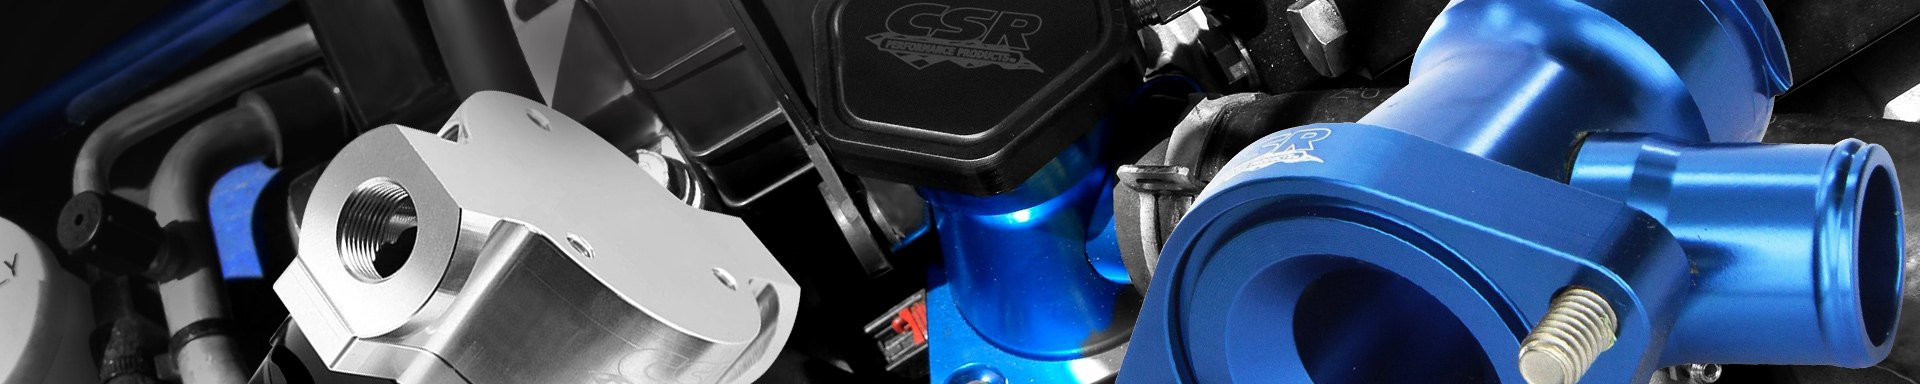 CSR Performance Engine Service Tools